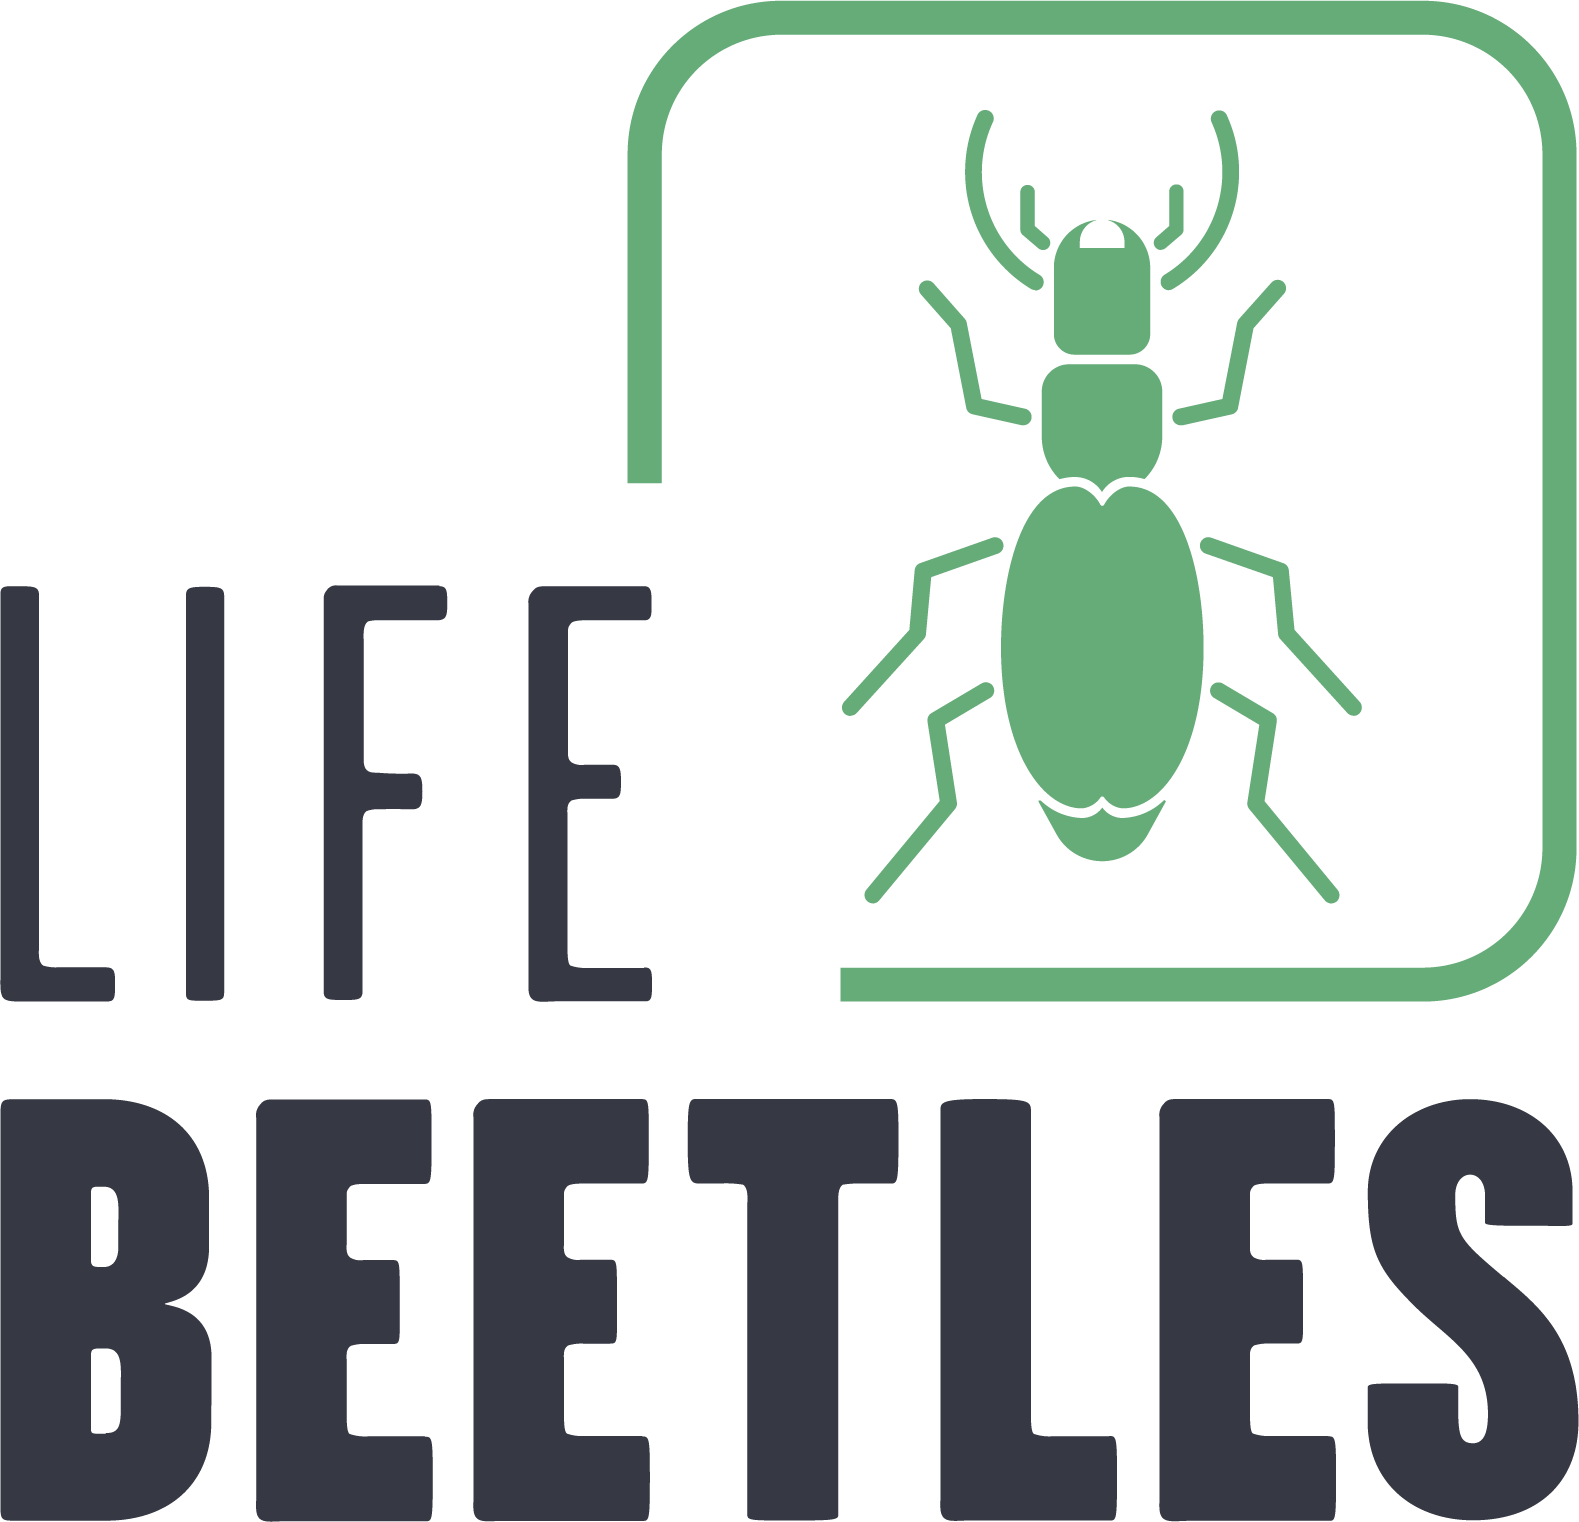 Life Beetles Azores Logo